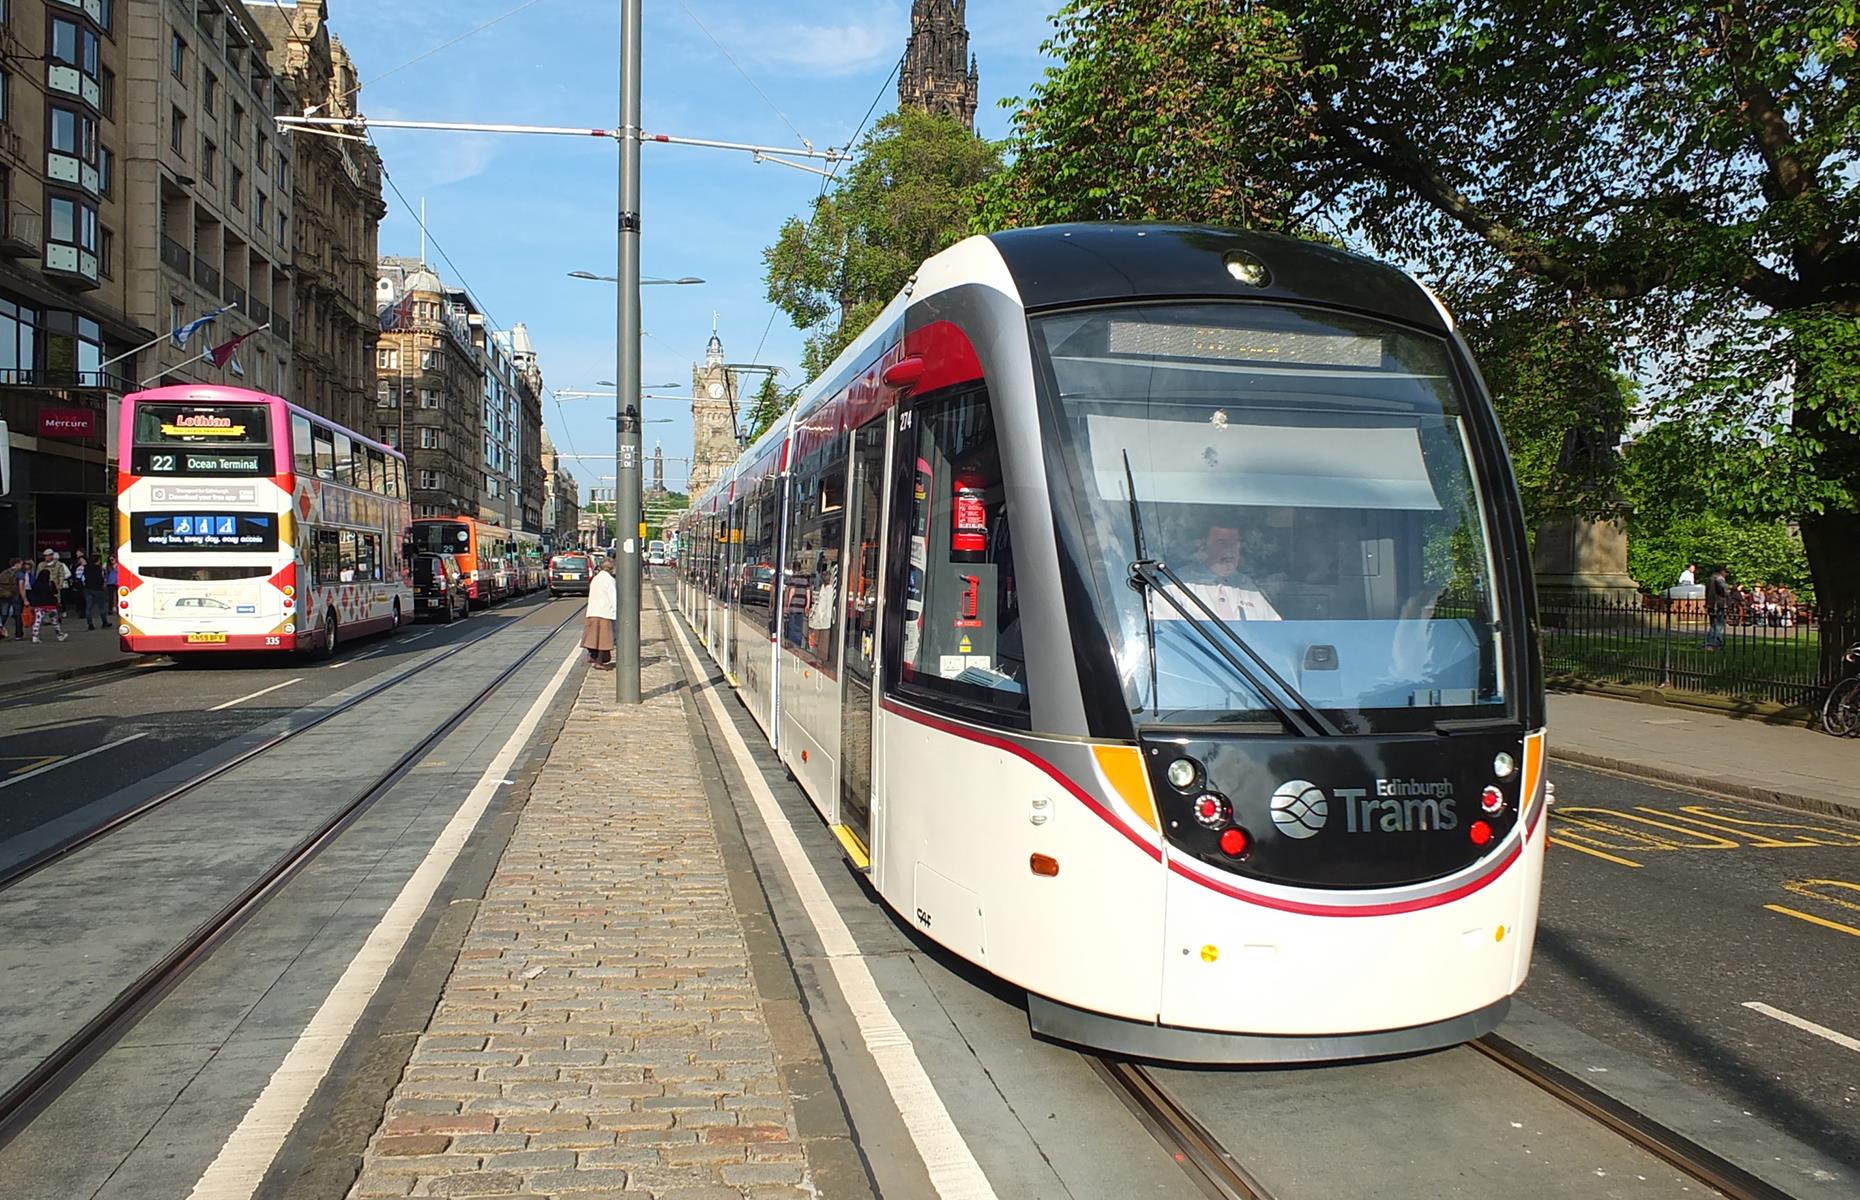 Edinburgh tram system, 2014